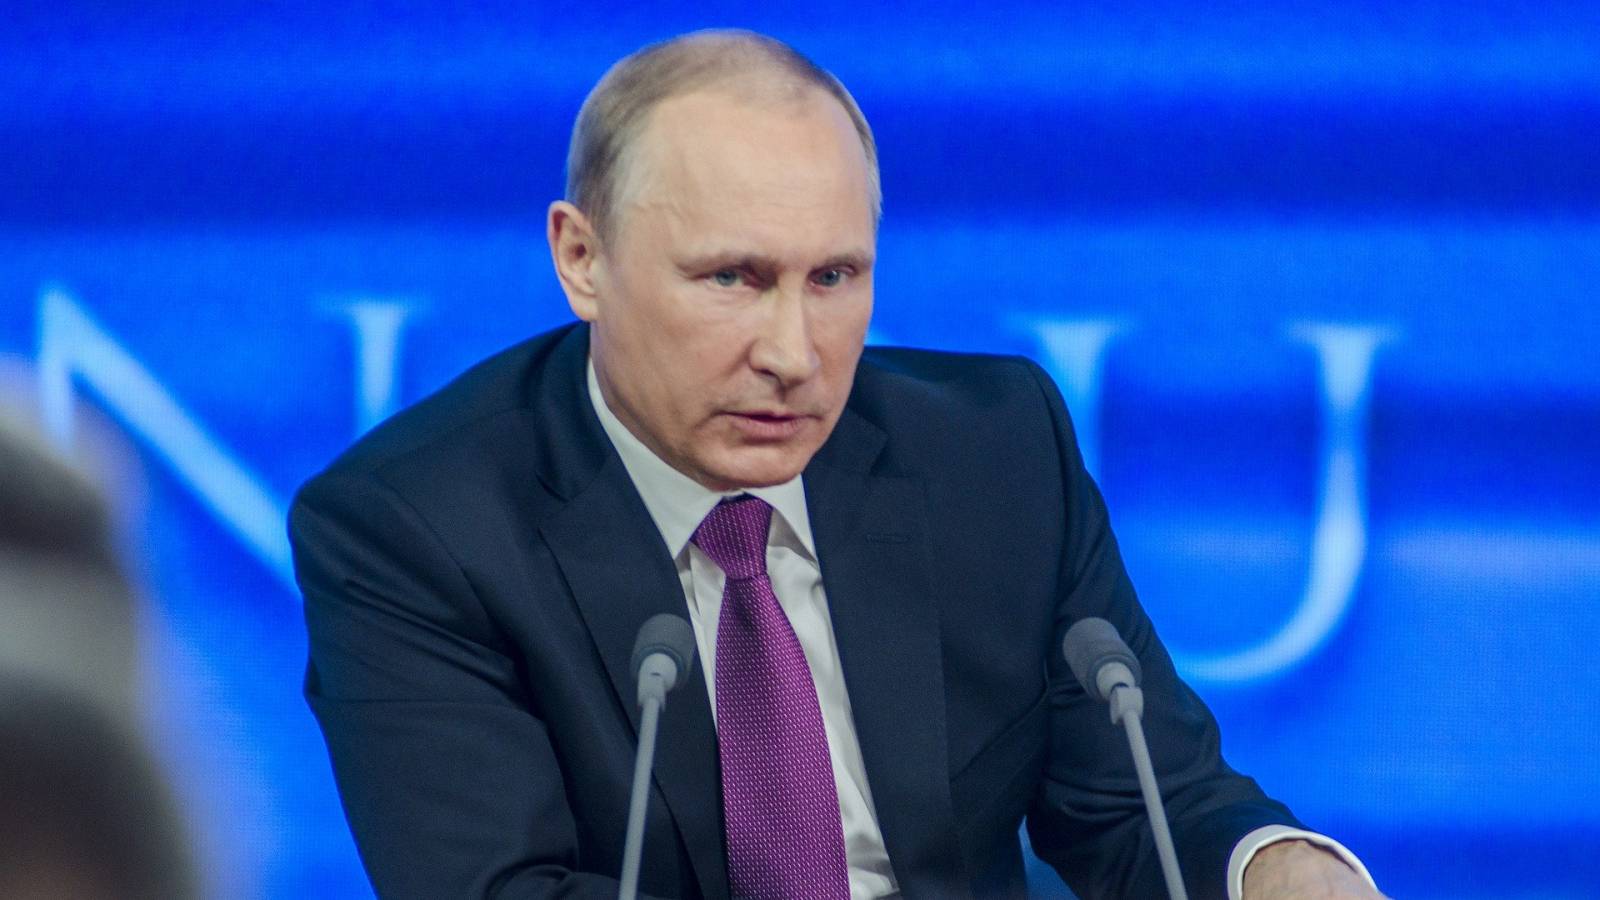 Vladimir Putin Anuntul Invadarea Ucrainei VIDEO